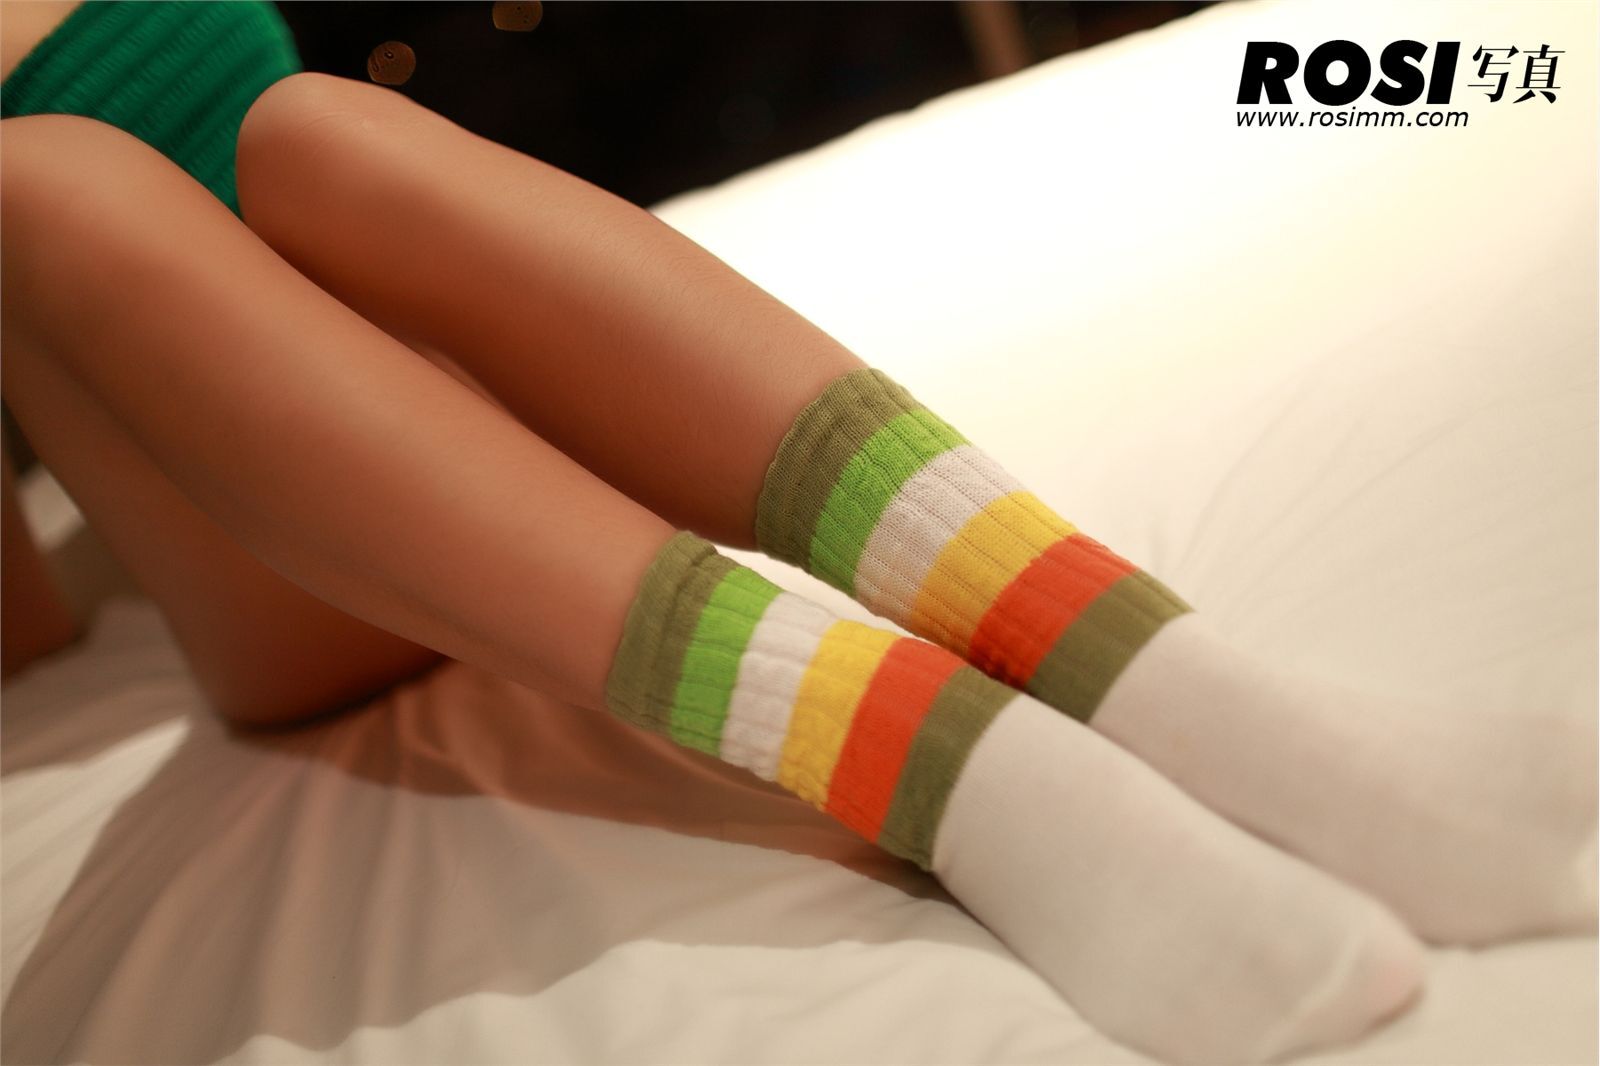 [ROSI] No.202 anonymous photo super bold photo classic stockings beauty